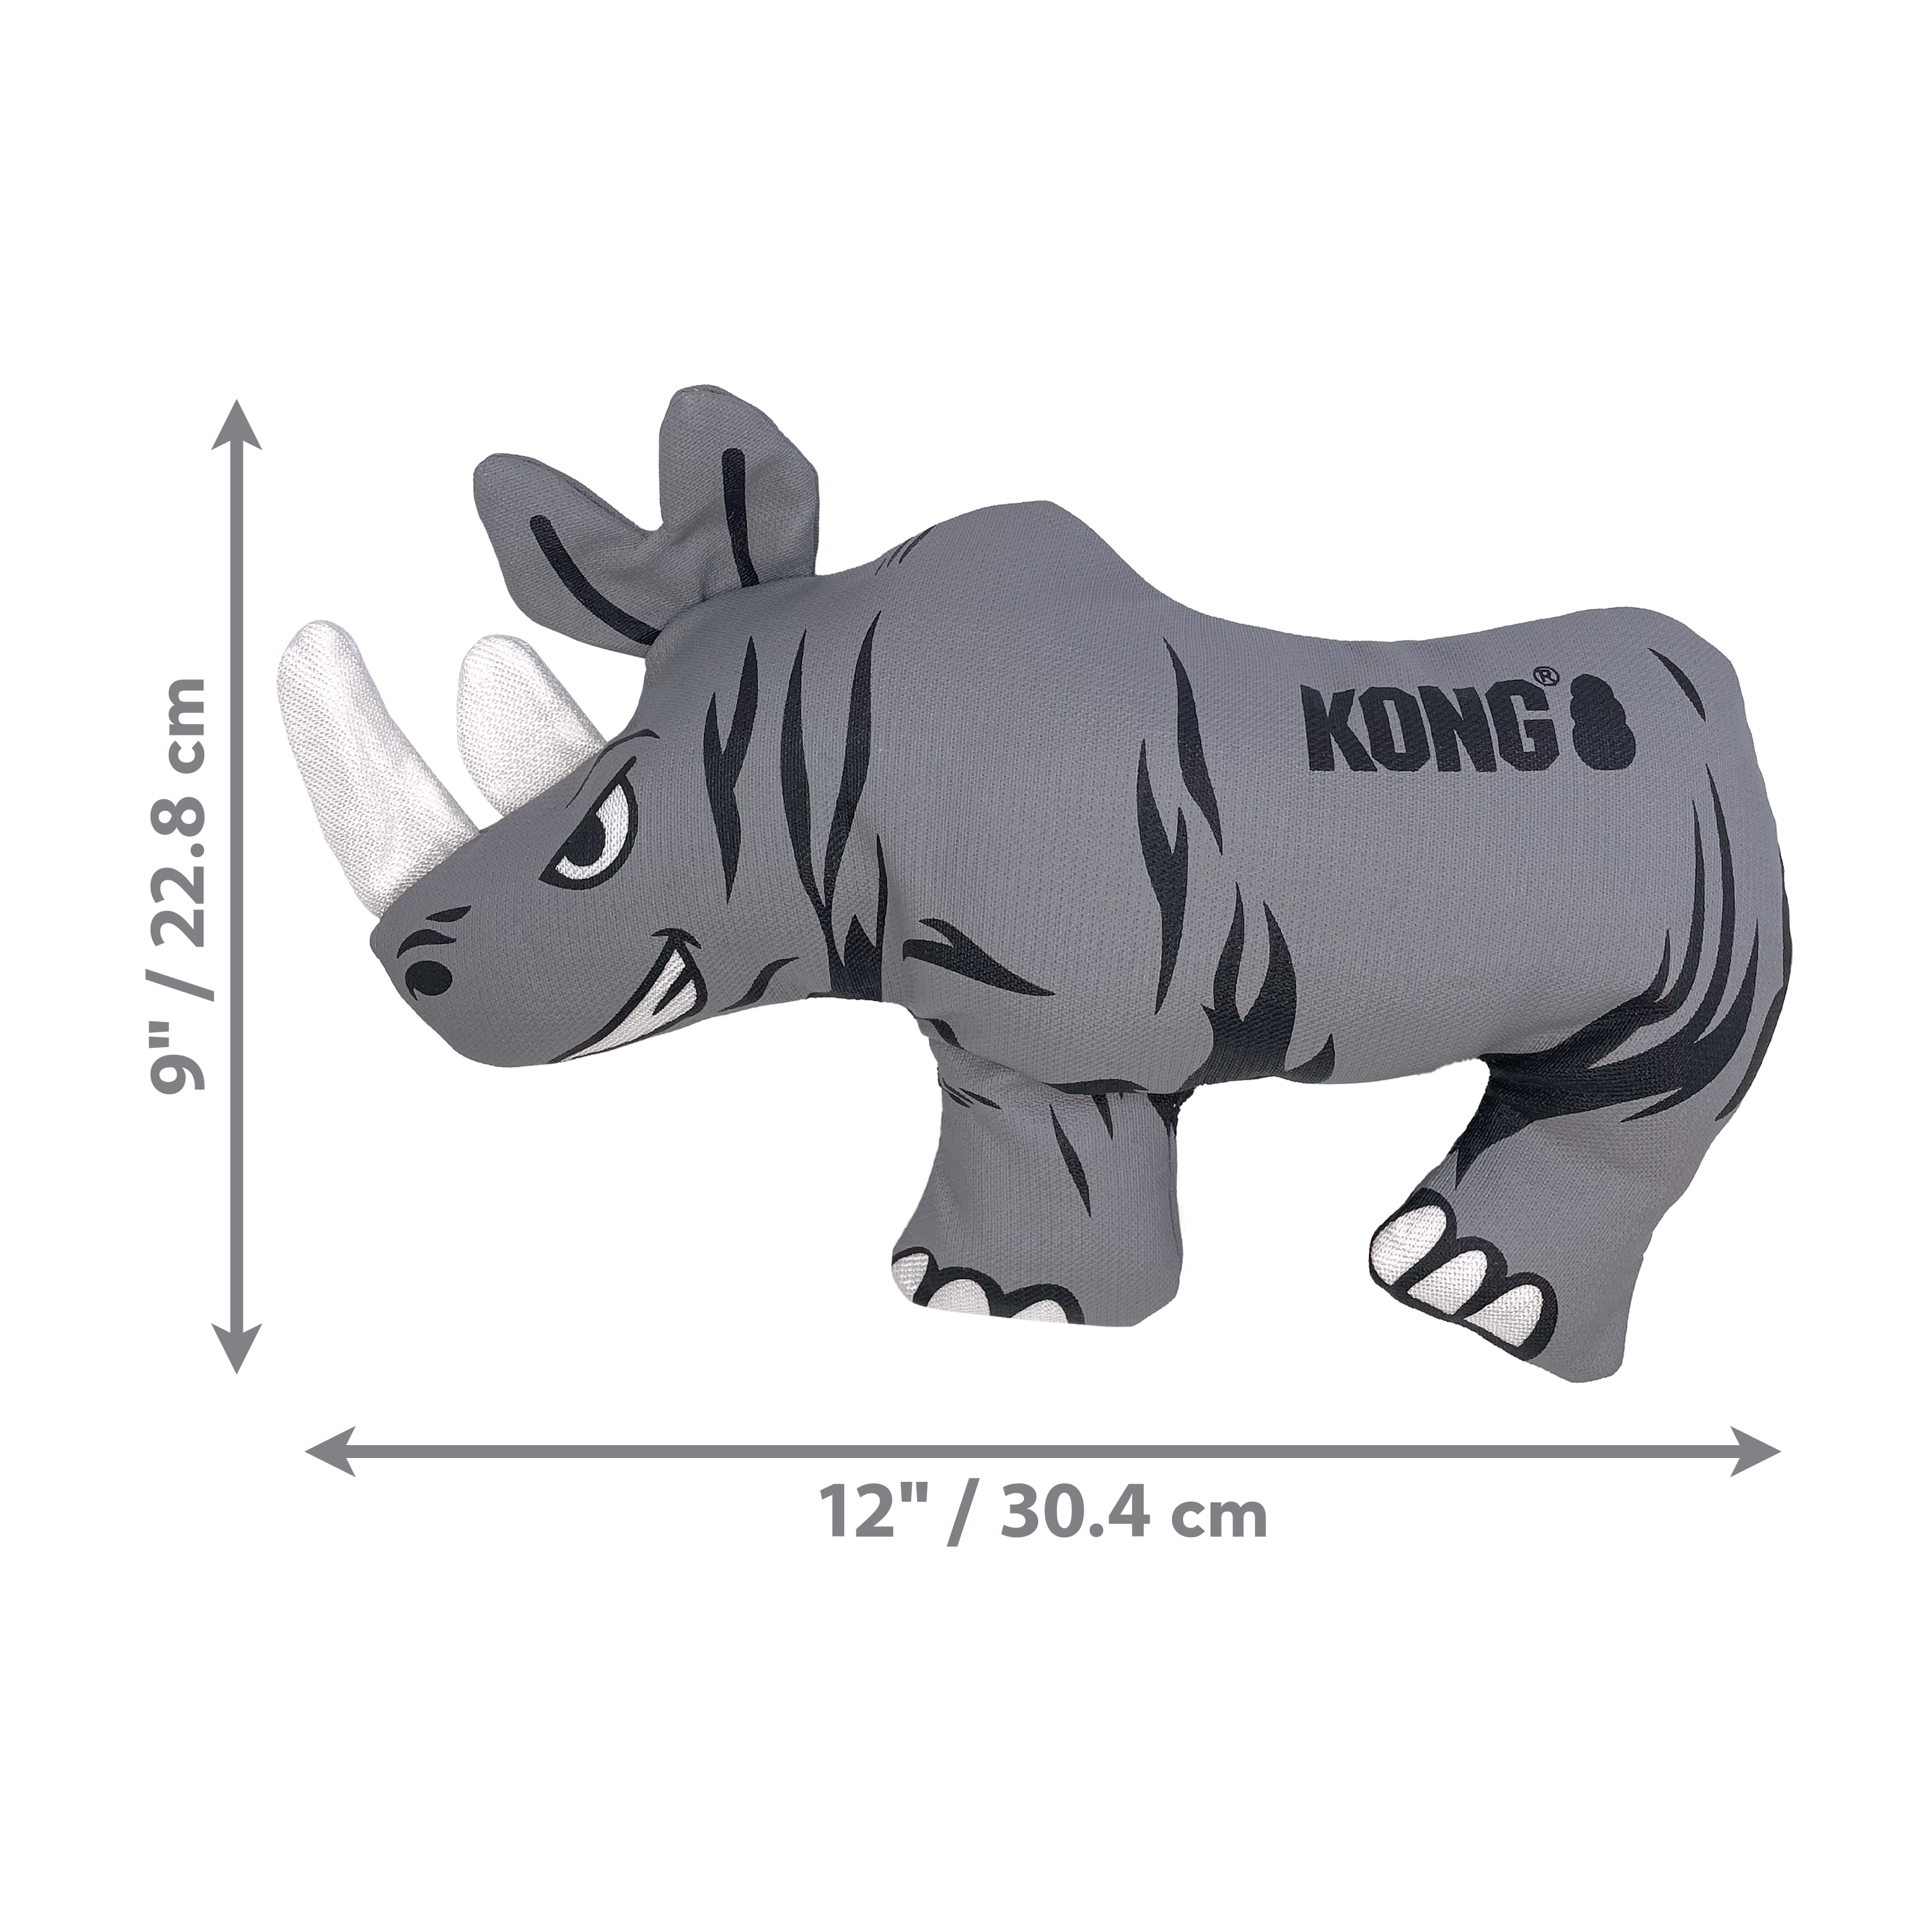 Maxx Rhino dimoffpack Produktbild